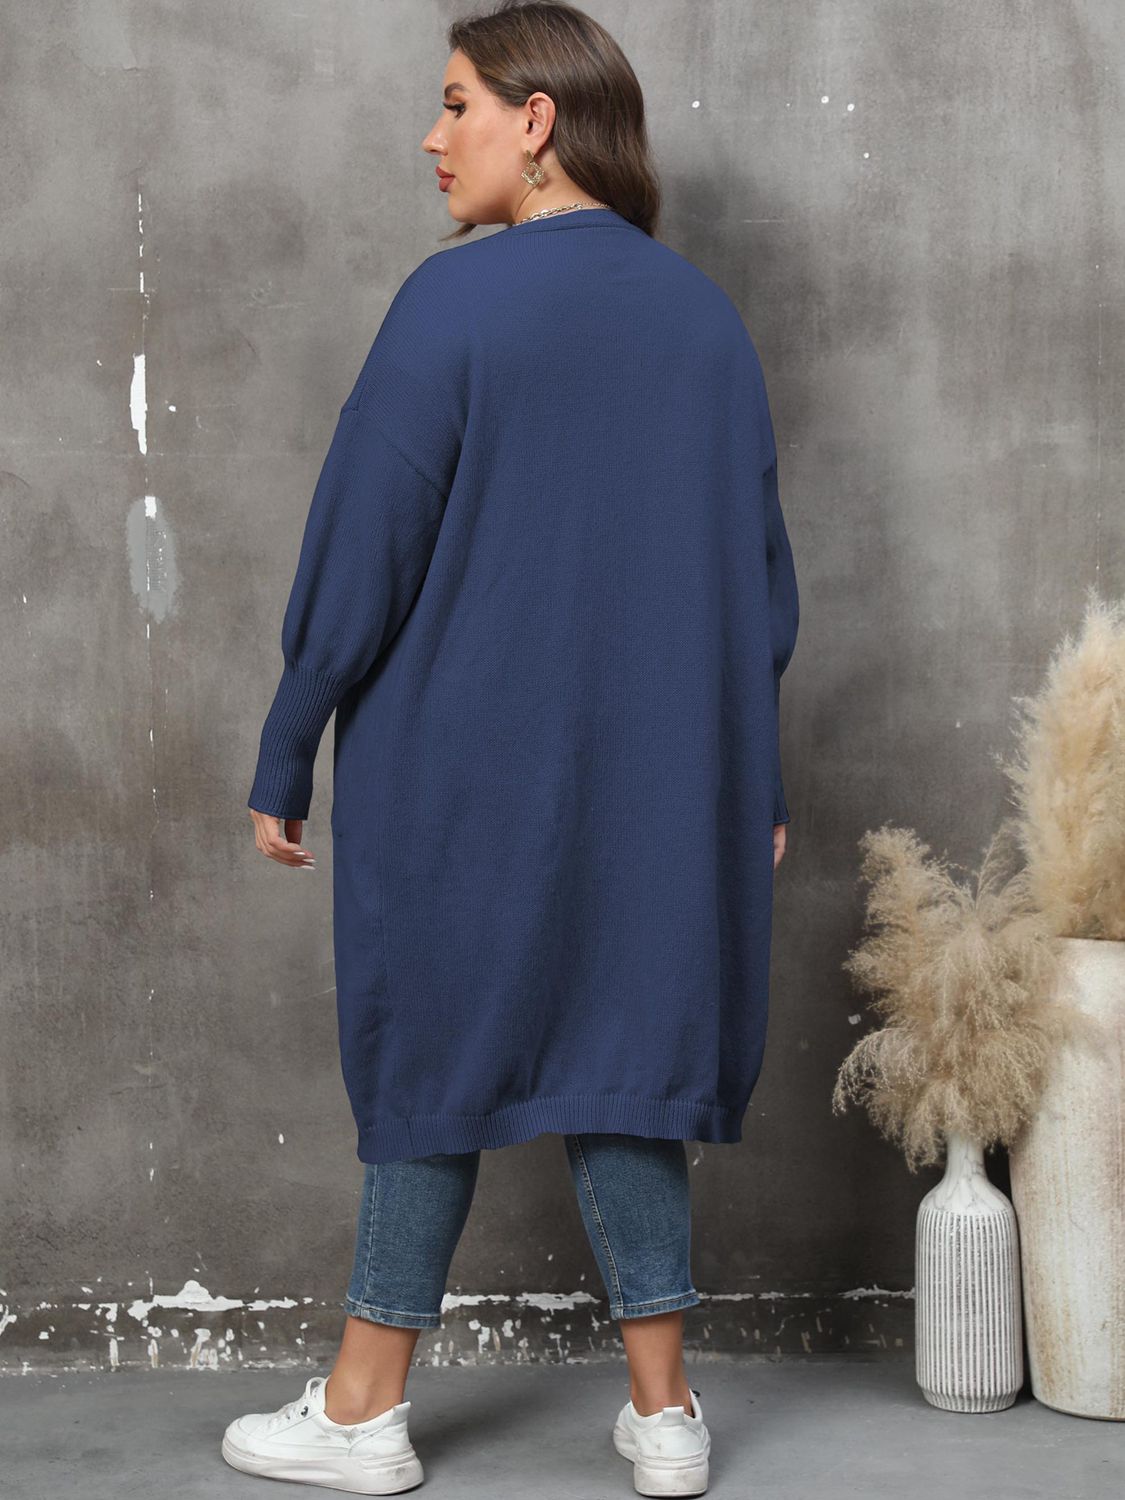 Plus Size Long Sleeve Pocketed Cardigan - Lola Cerina Boutique